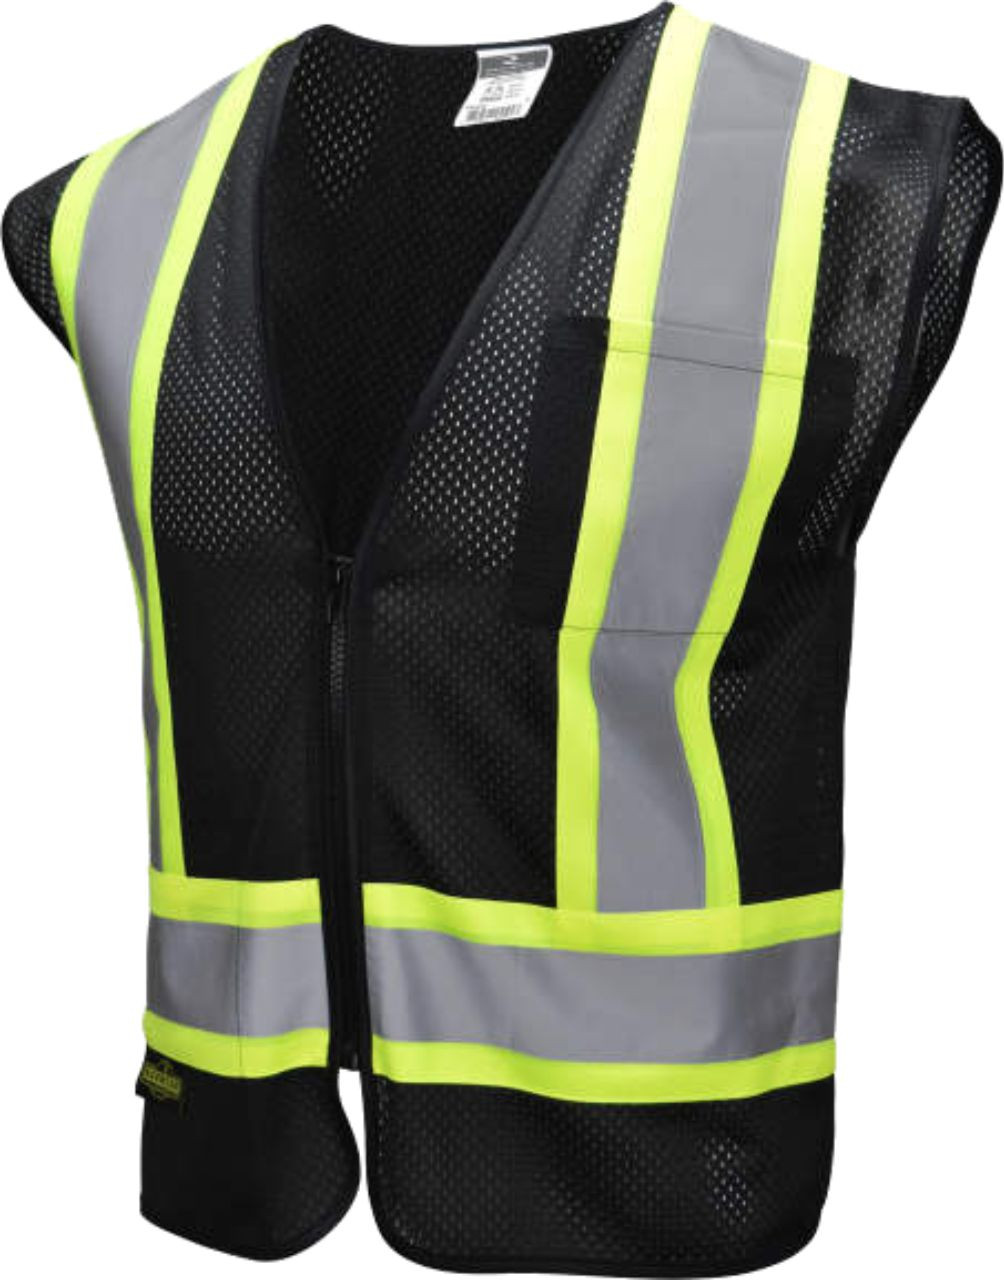 Black Safety Vest | Black Safety Vest with Trim